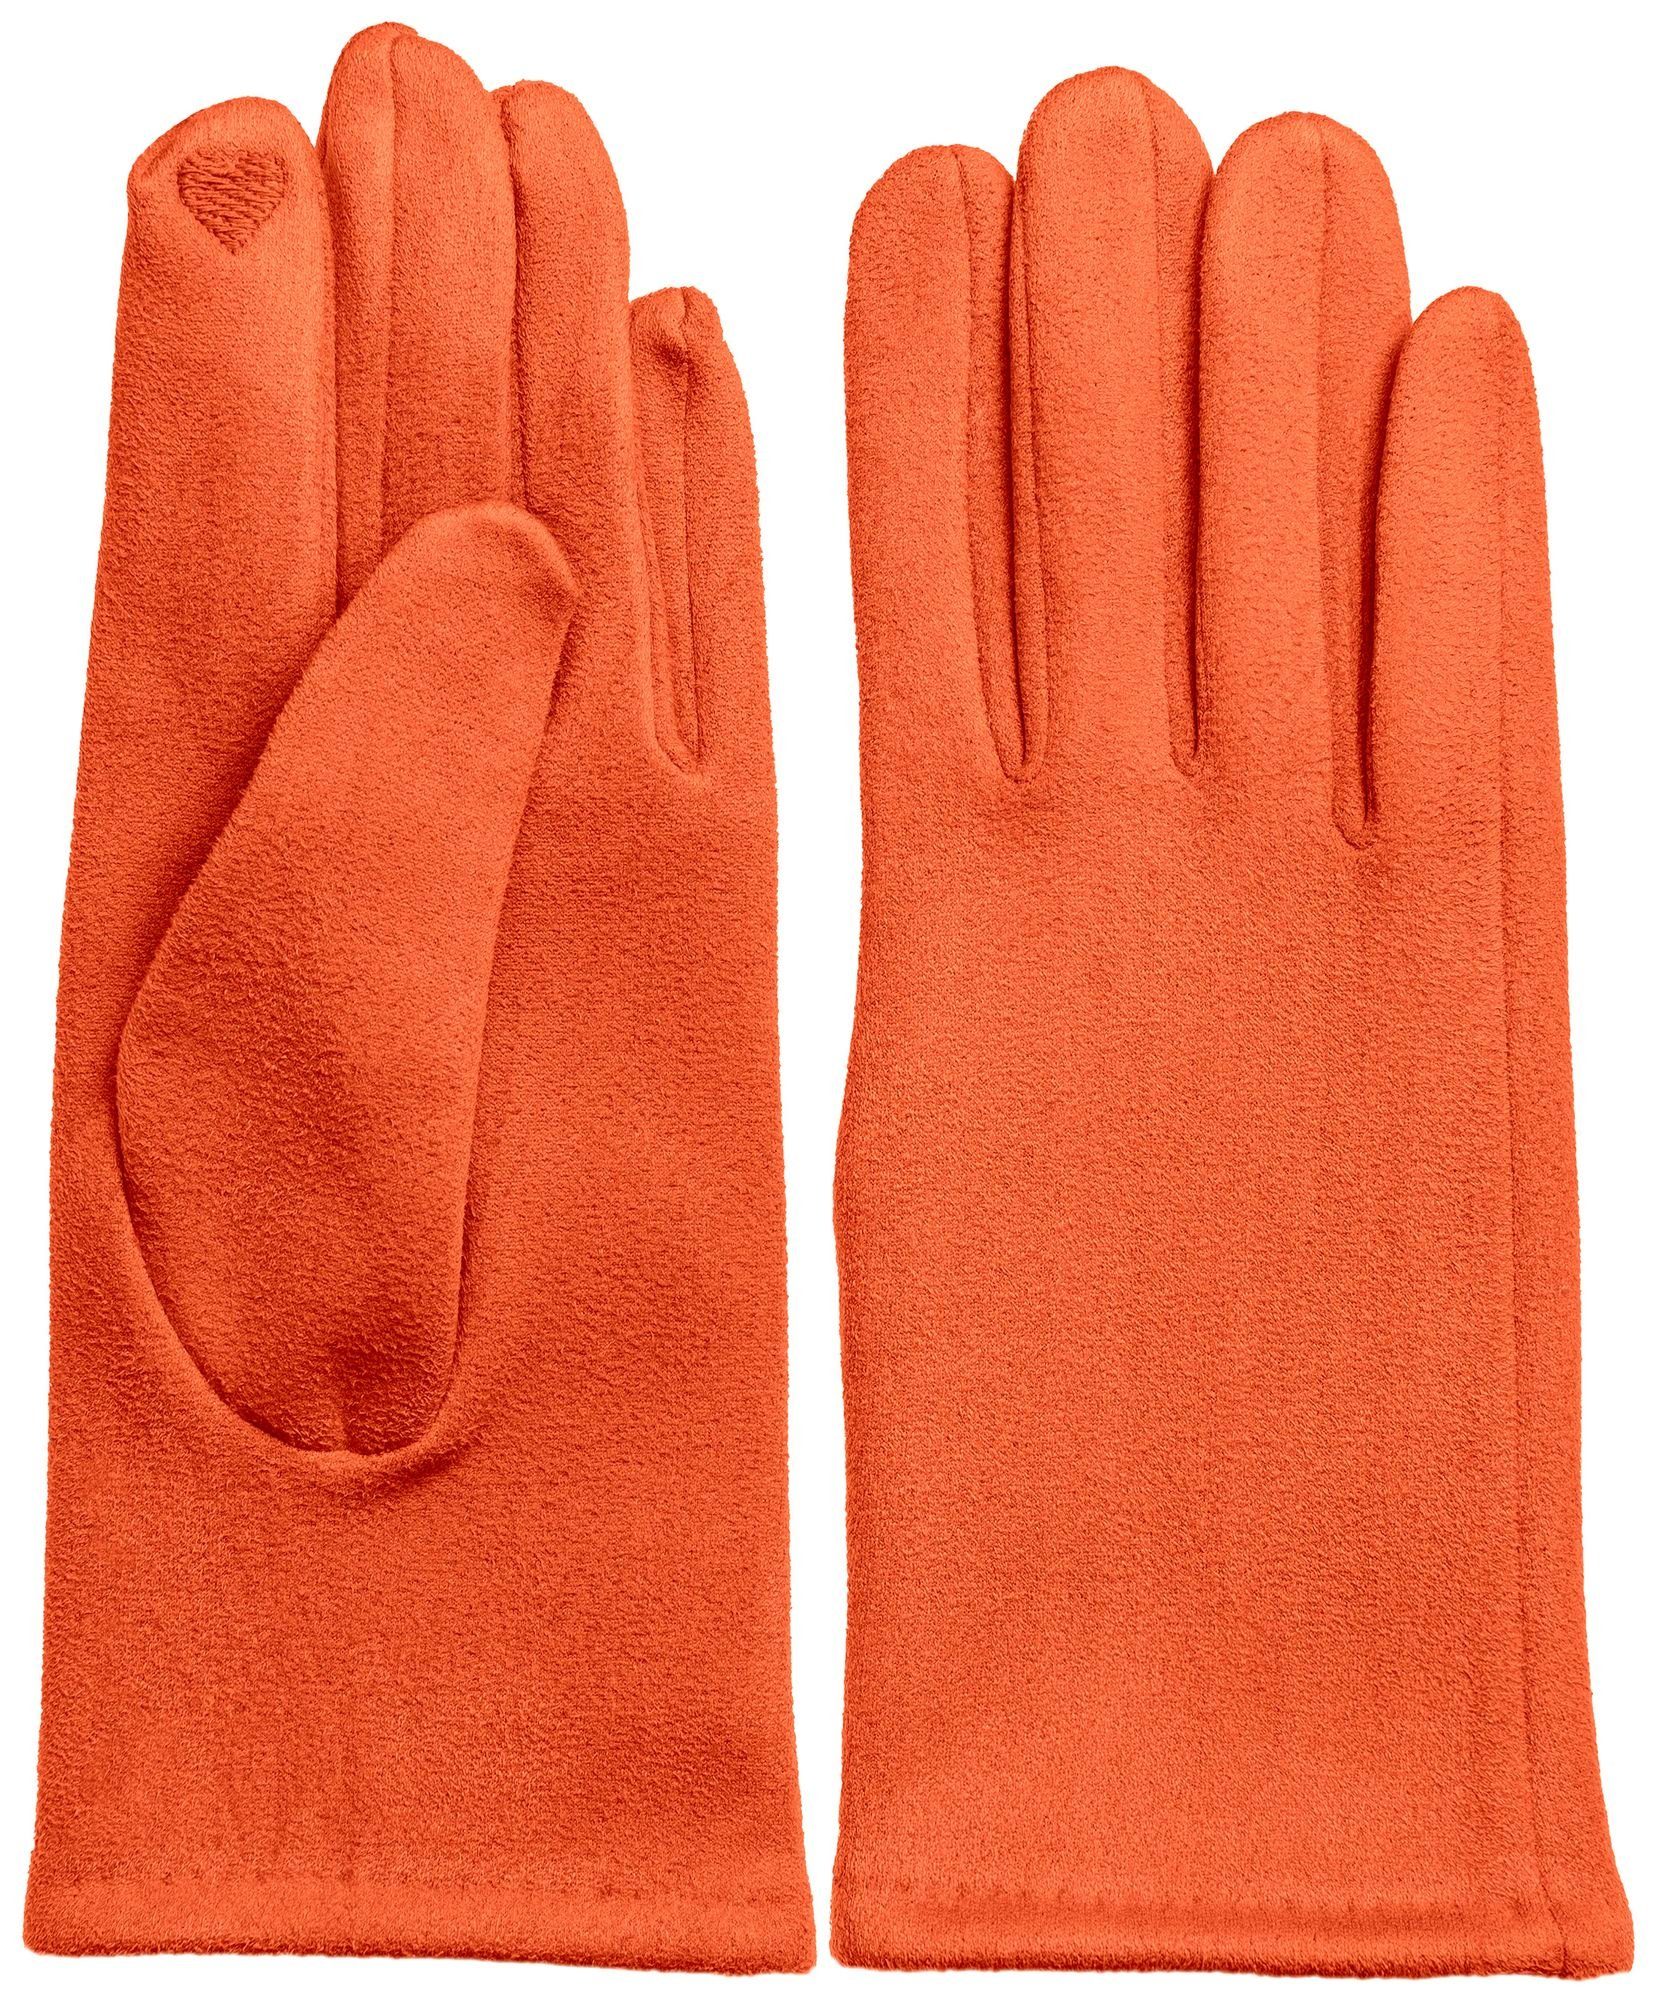 Caspar Strickhandschuhe GLV013 klassisch elegante uni Damen Winter Handschuhe rost (orange)